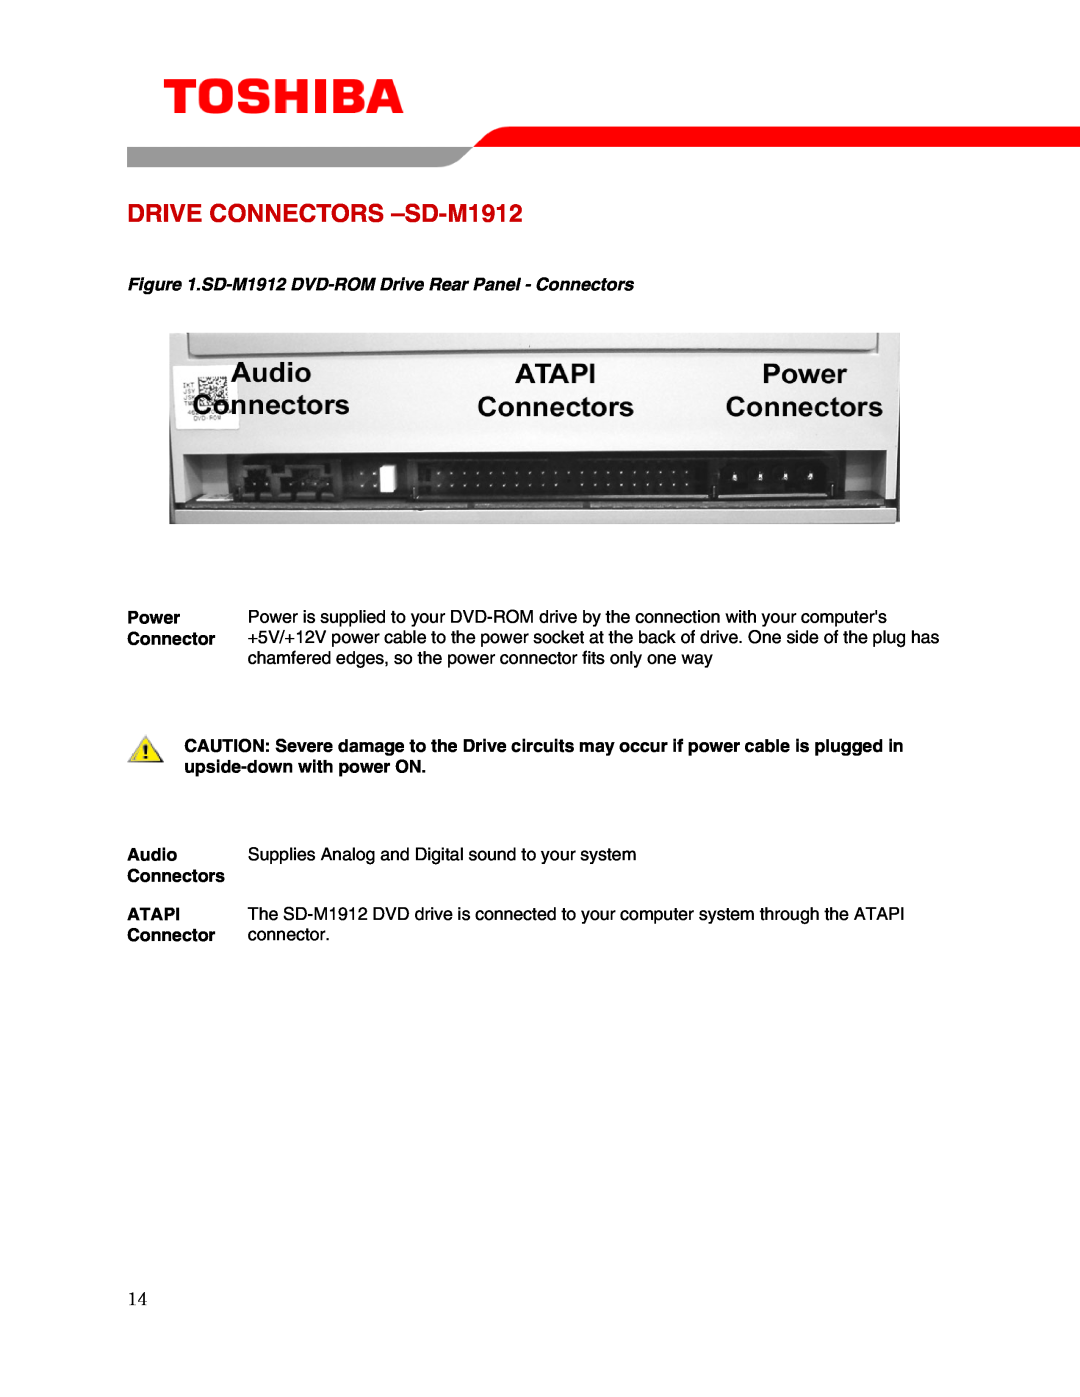 Toshiba user manual DRIVE CONNECTORS -SD-M1912, SD-M1912 DVD-ROM Drive Rear Panel - Connectors, Atapi, Power, Audio 